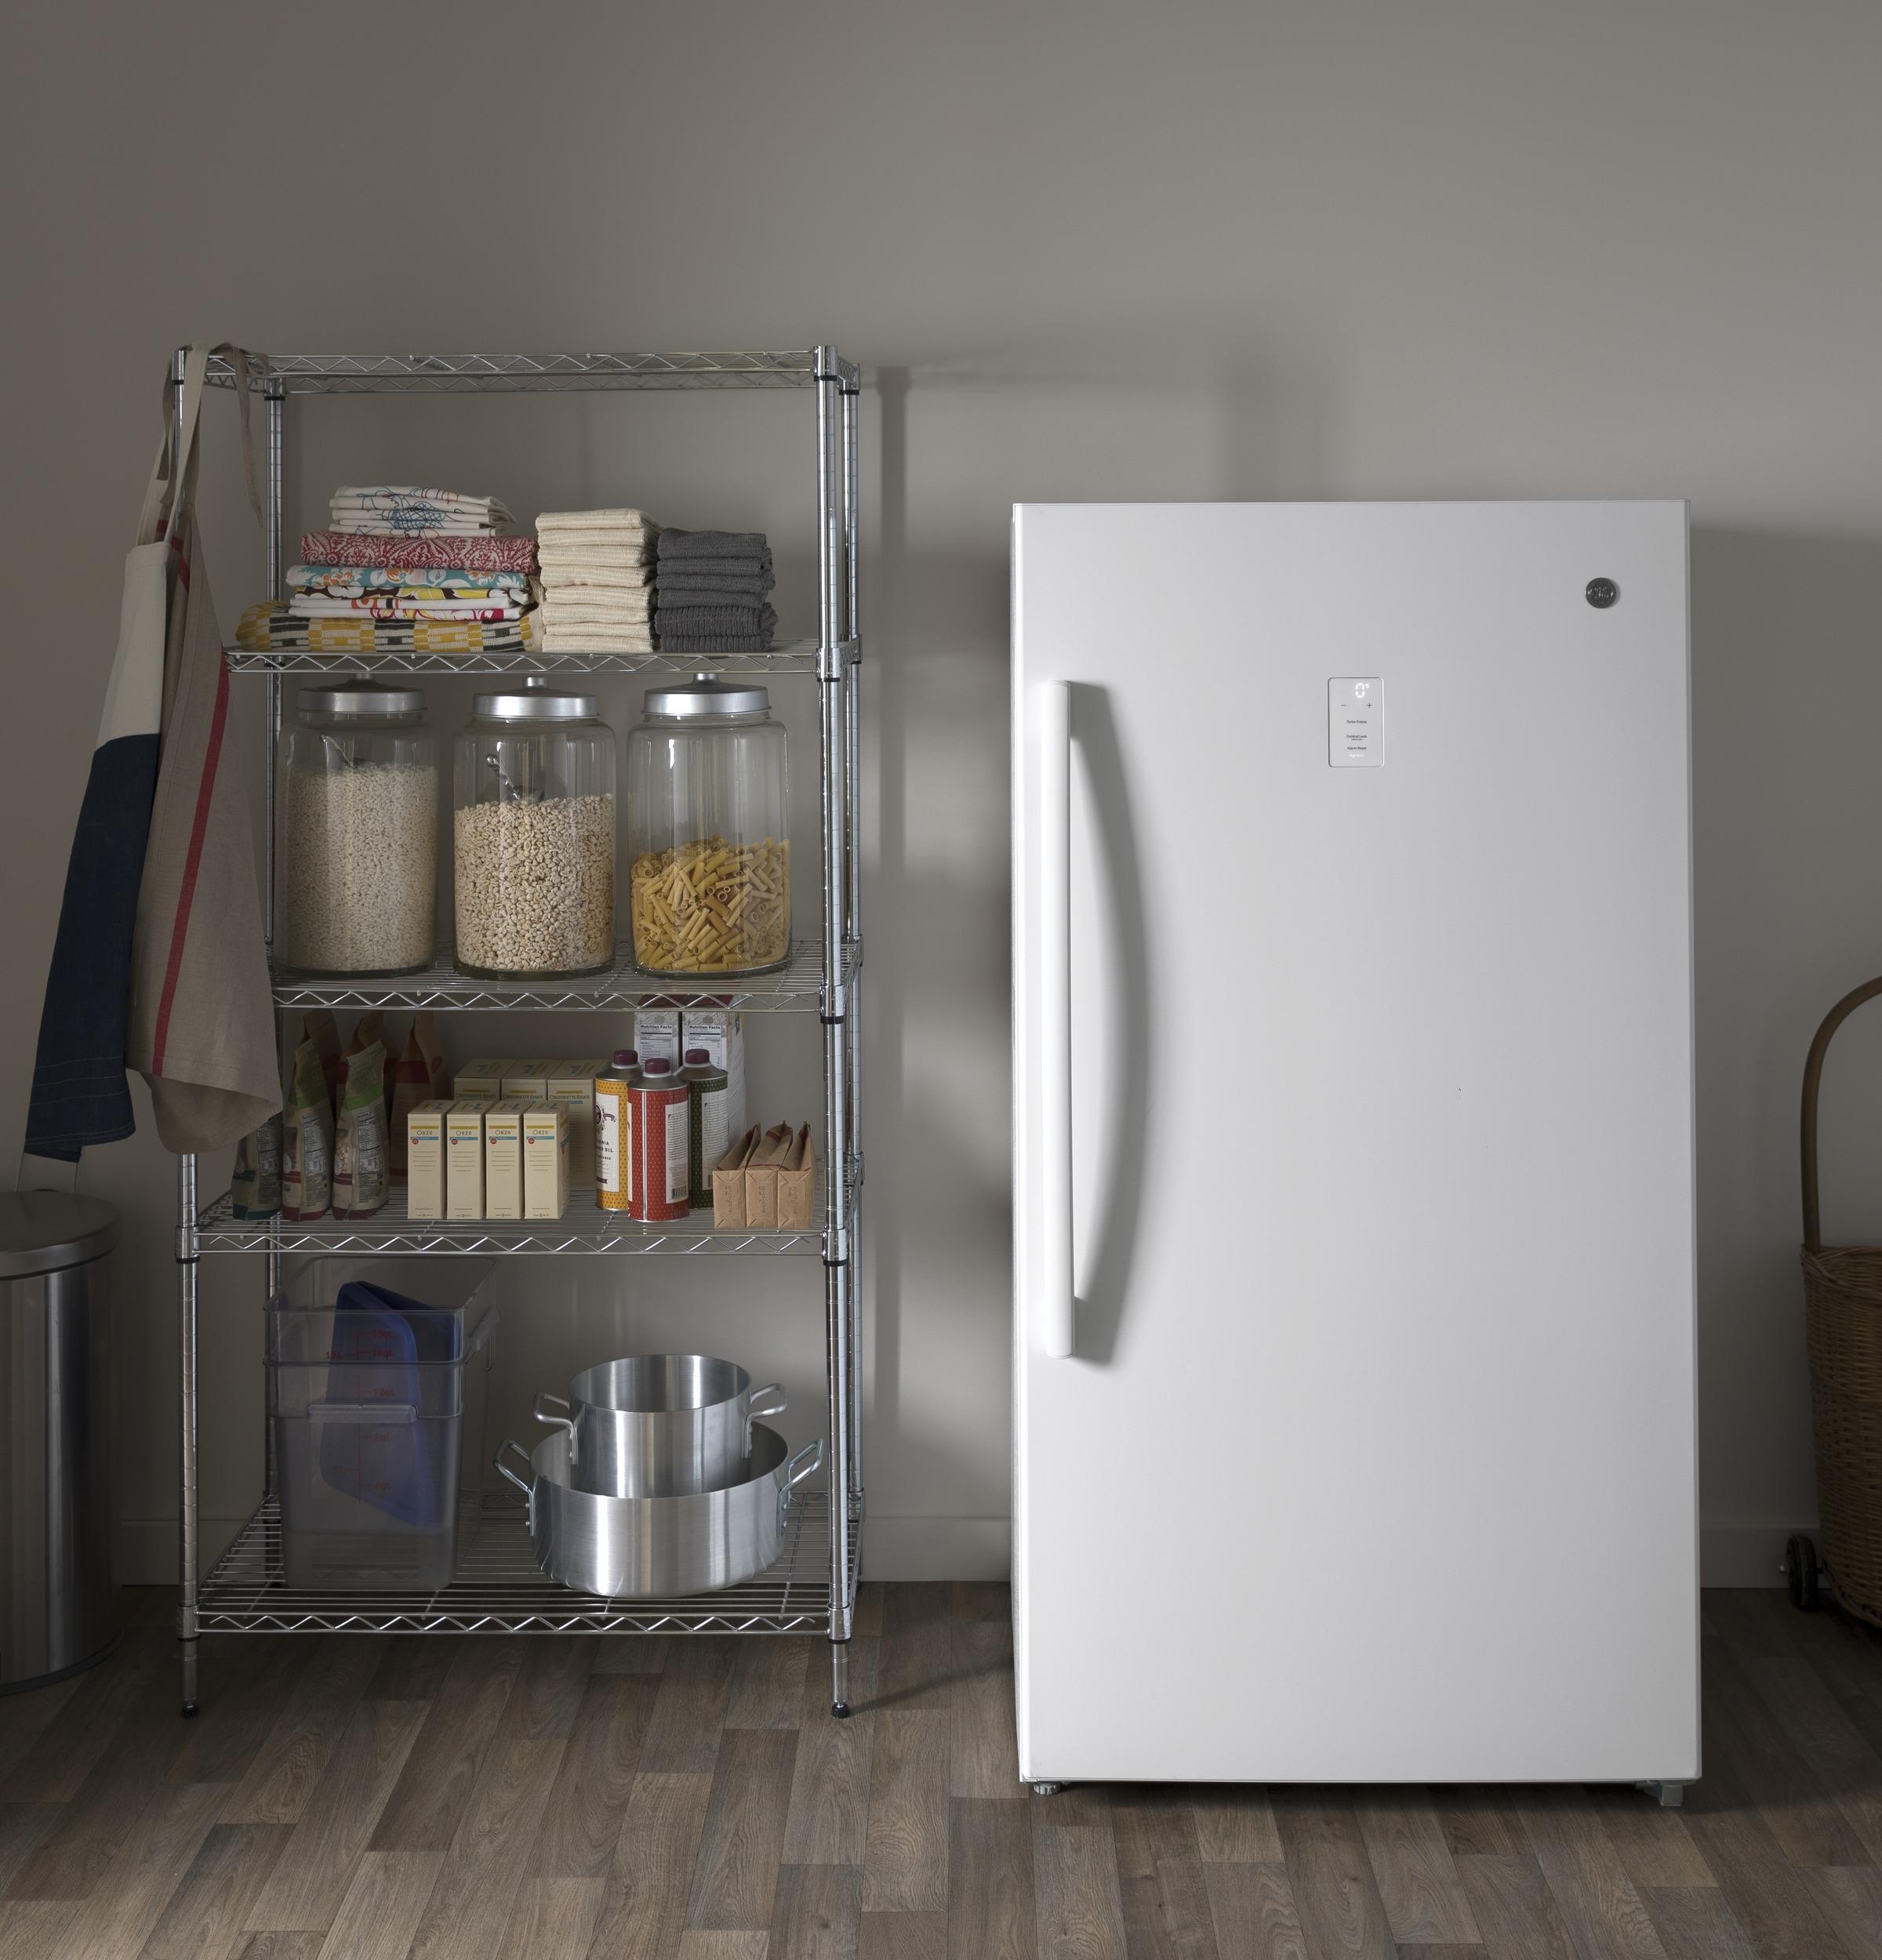 GE® ENERGY STAR® 17.3 Cu. Ft. Frost-Free Garage Ready Upright Freezer